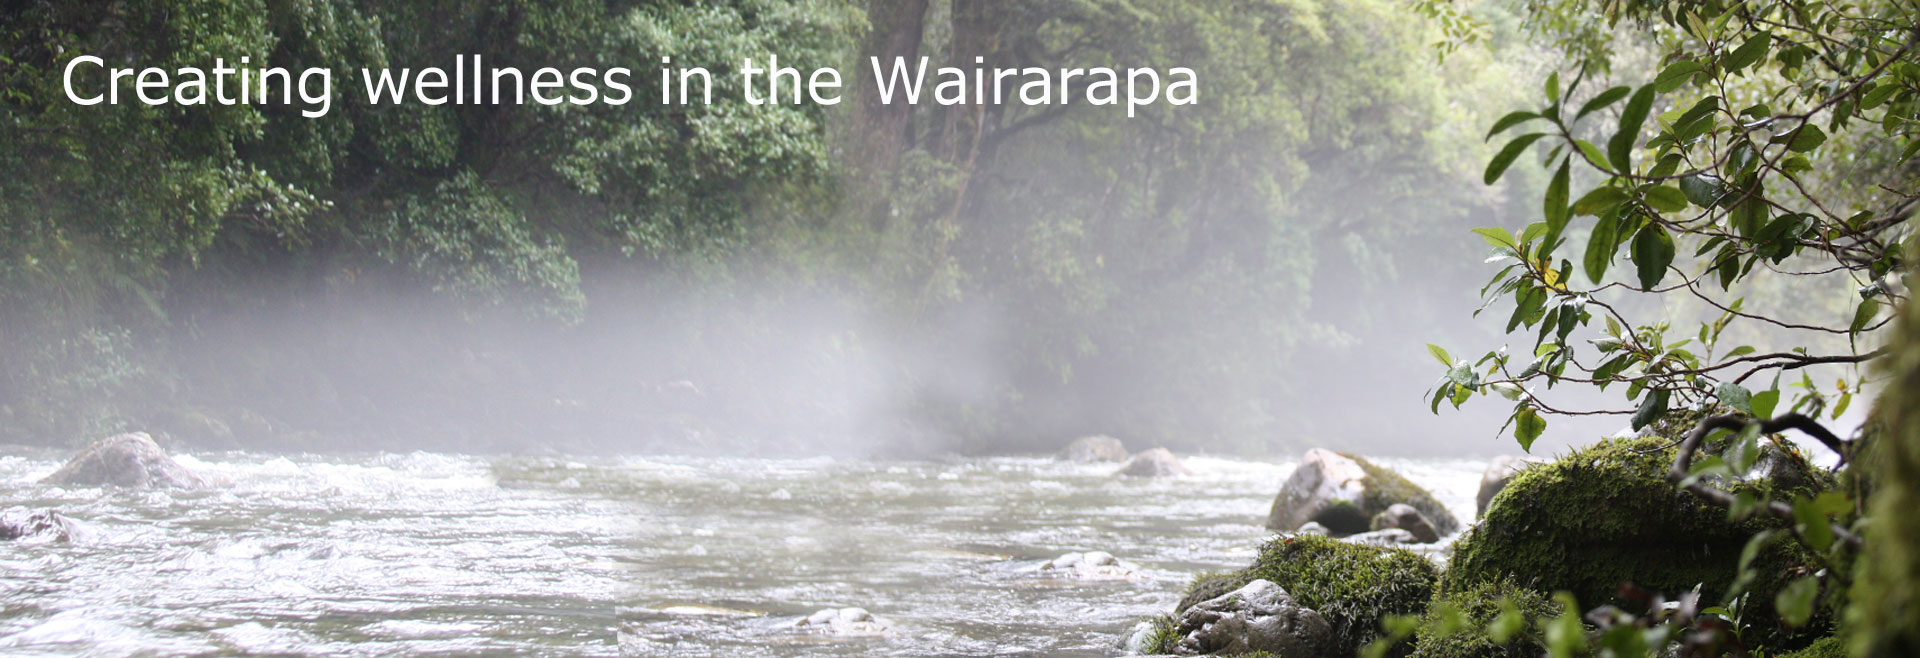 Creating wellness in the Wairarapa